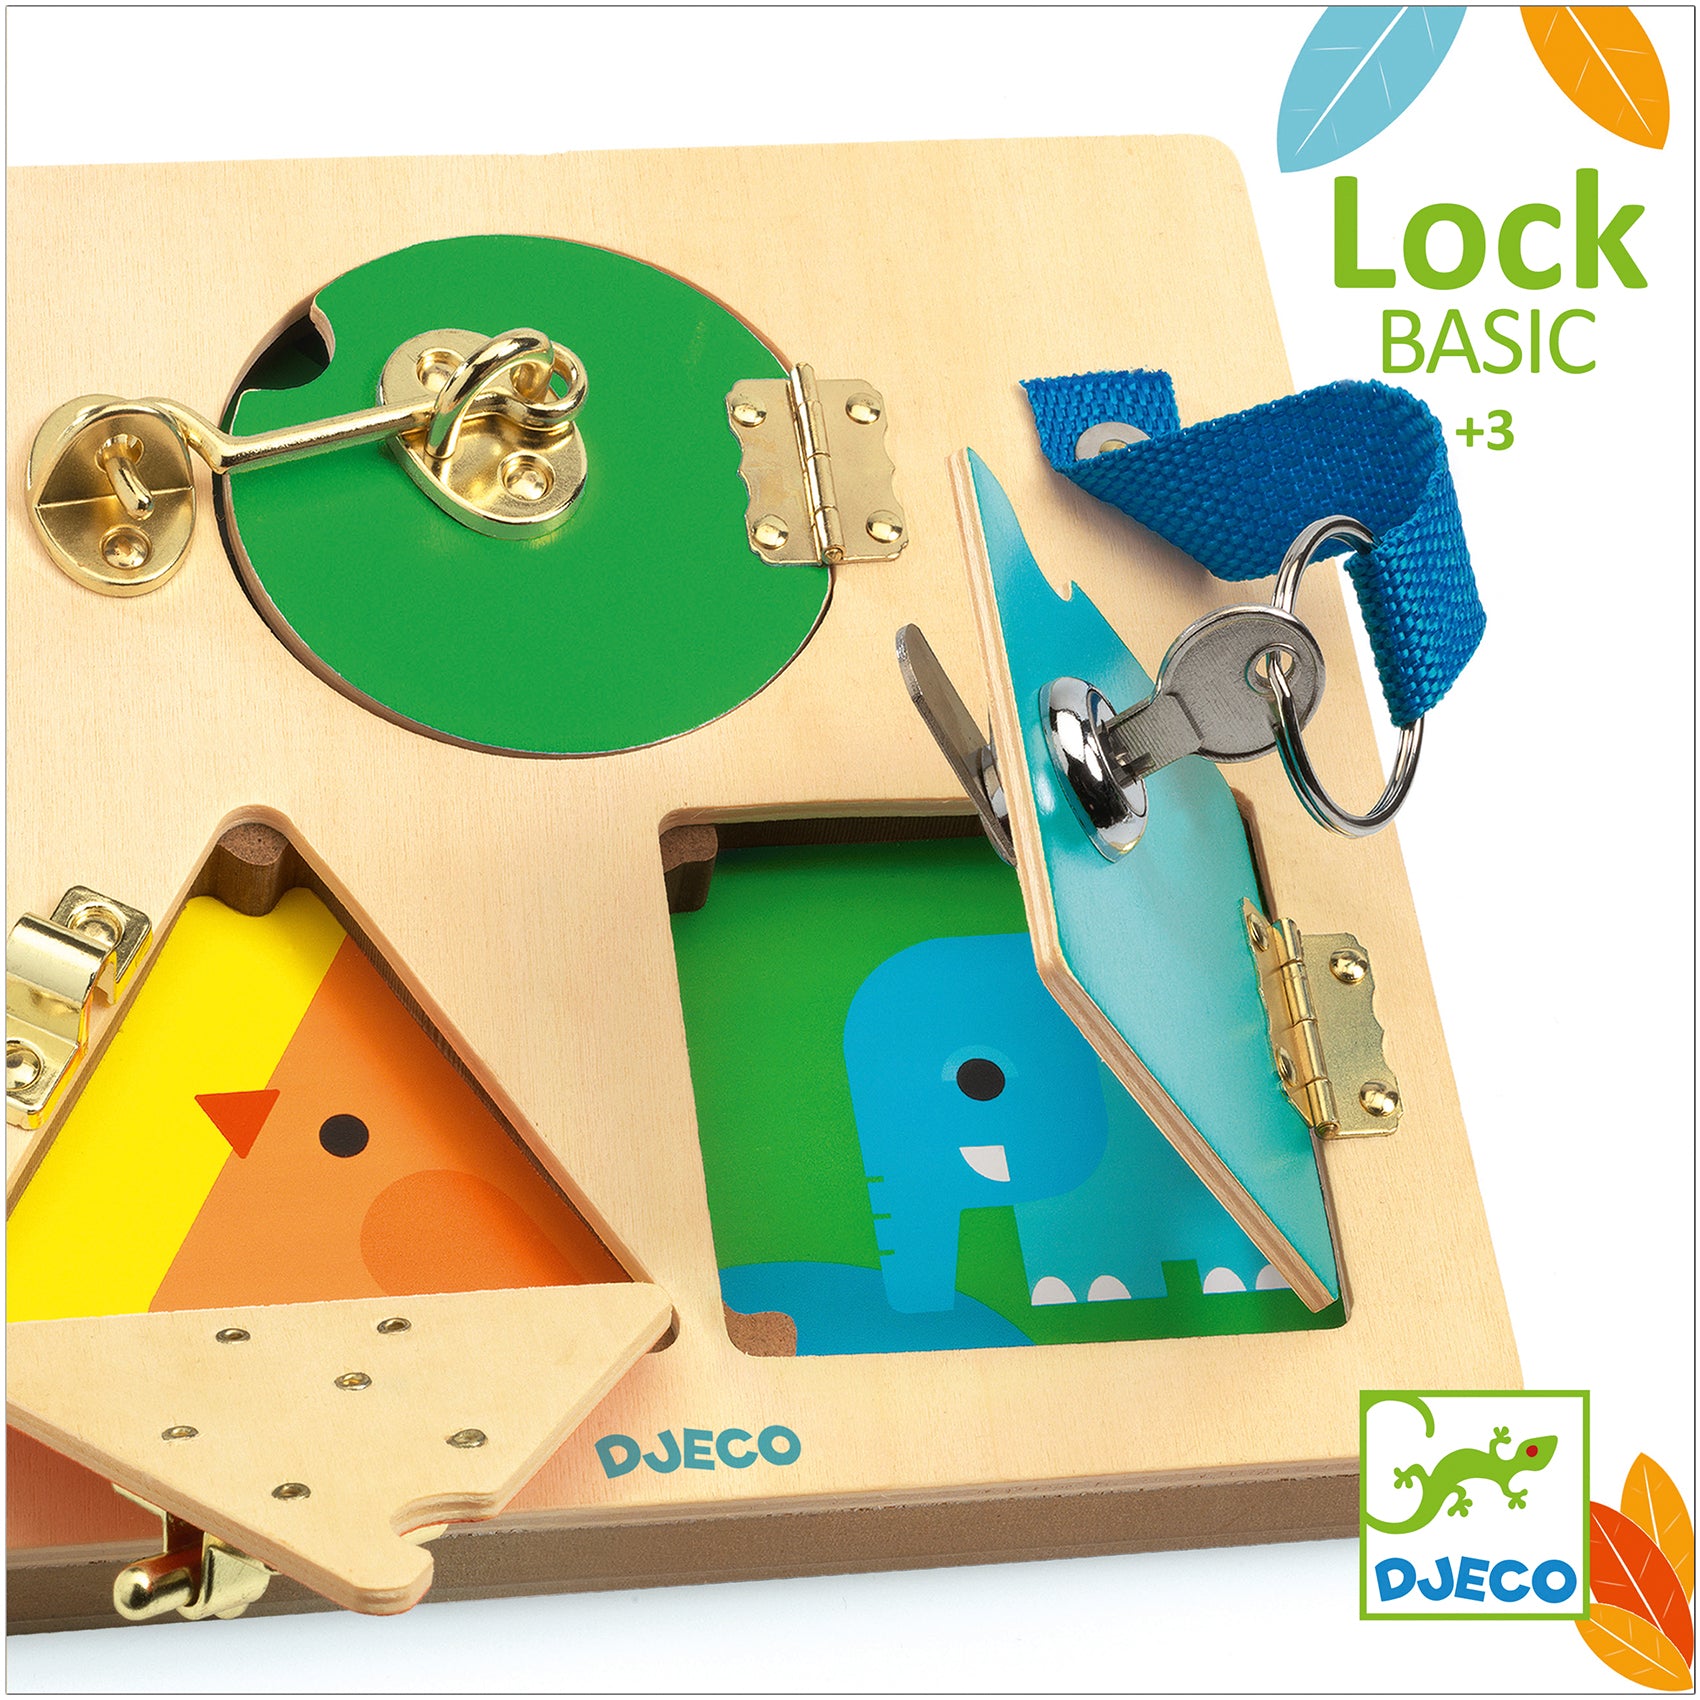 Djeco | Lock Basic